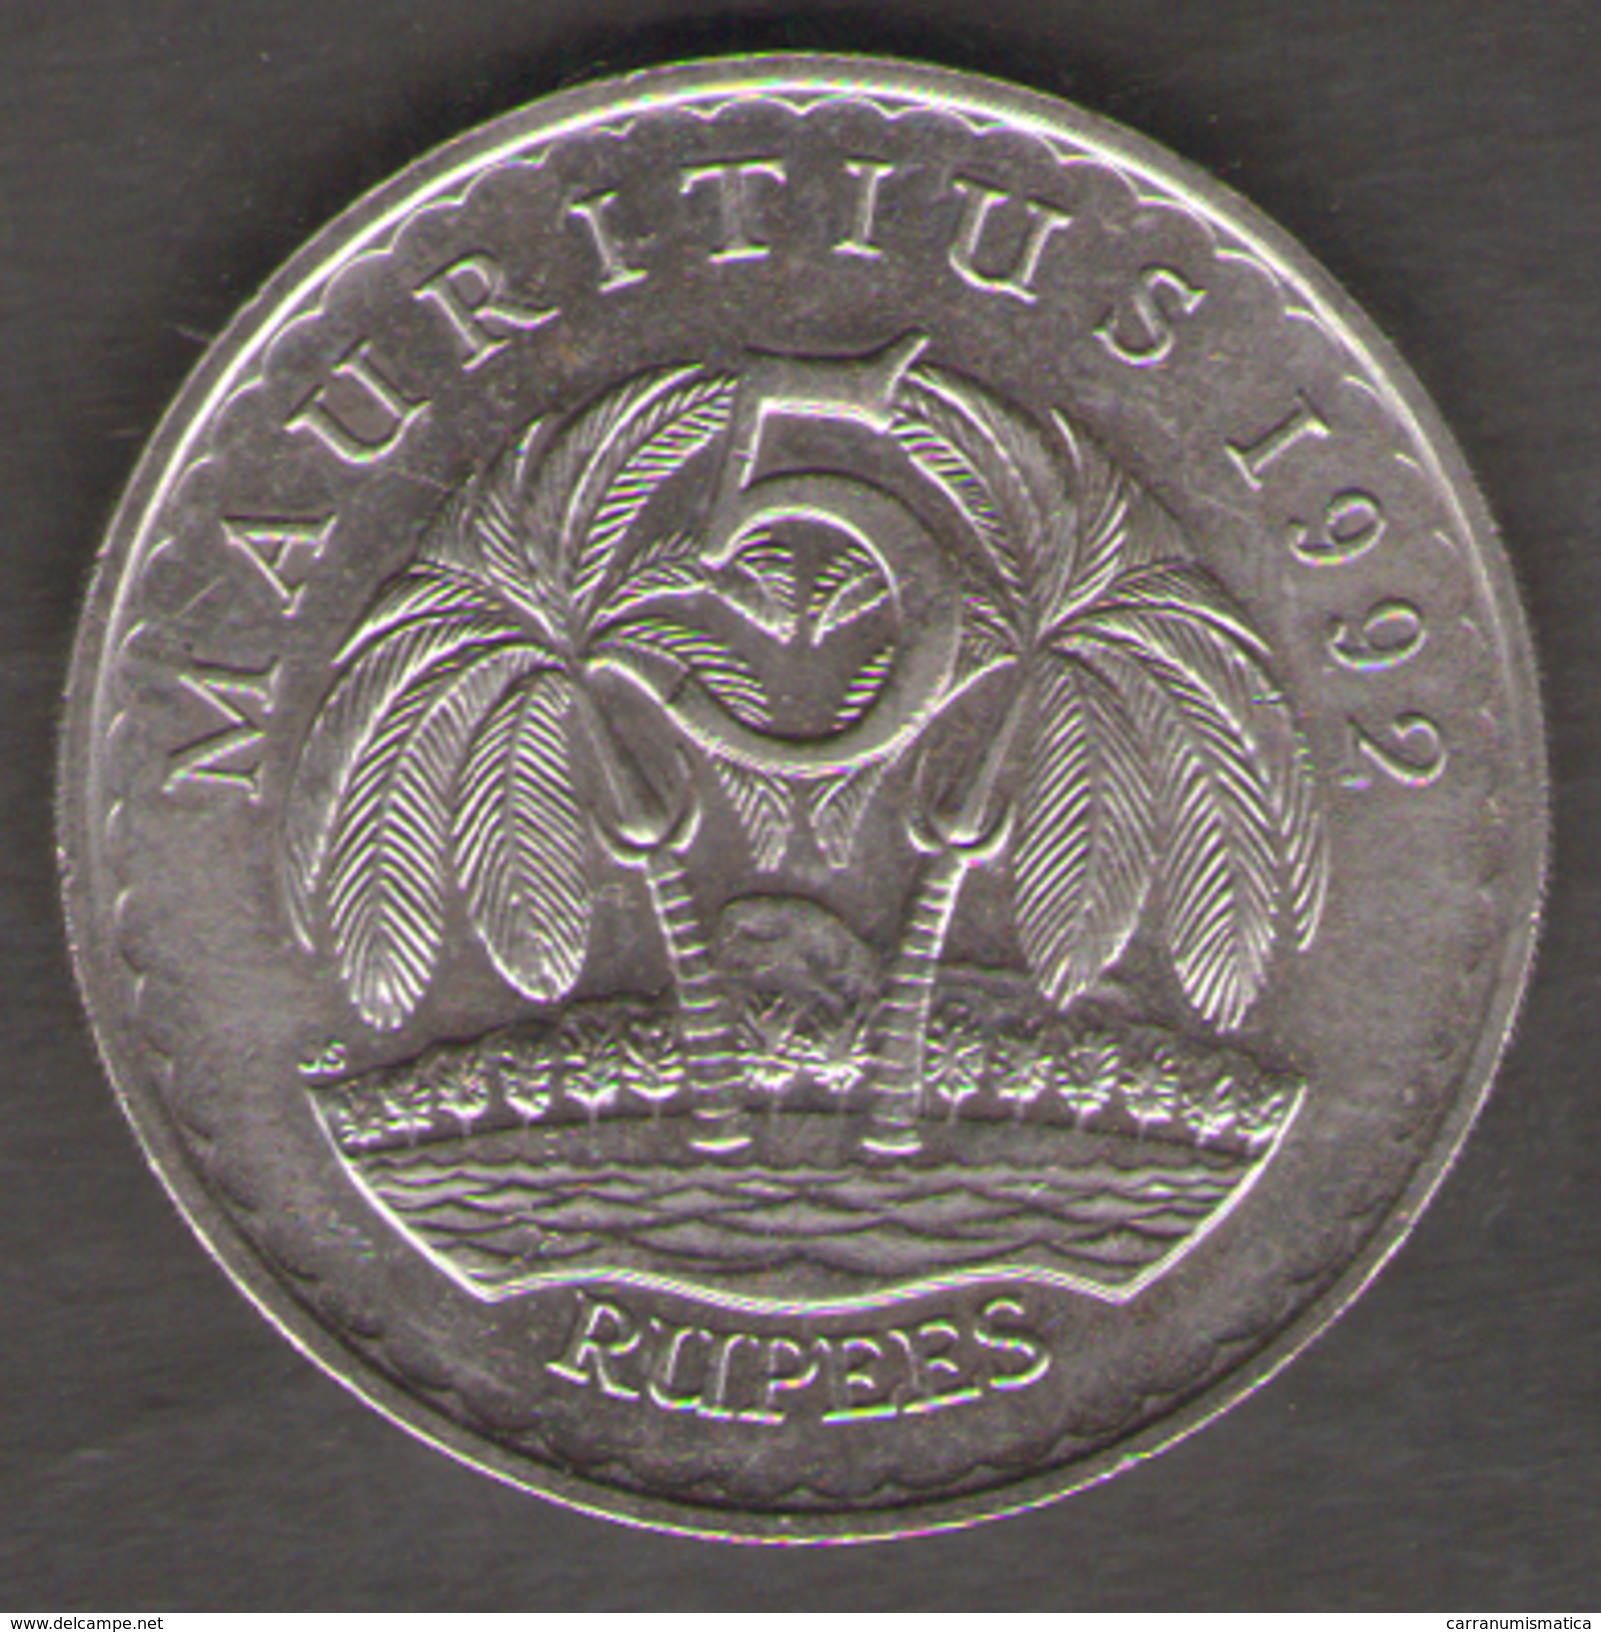 MAURITIUS 5 RUPEES 1992 - Maurice